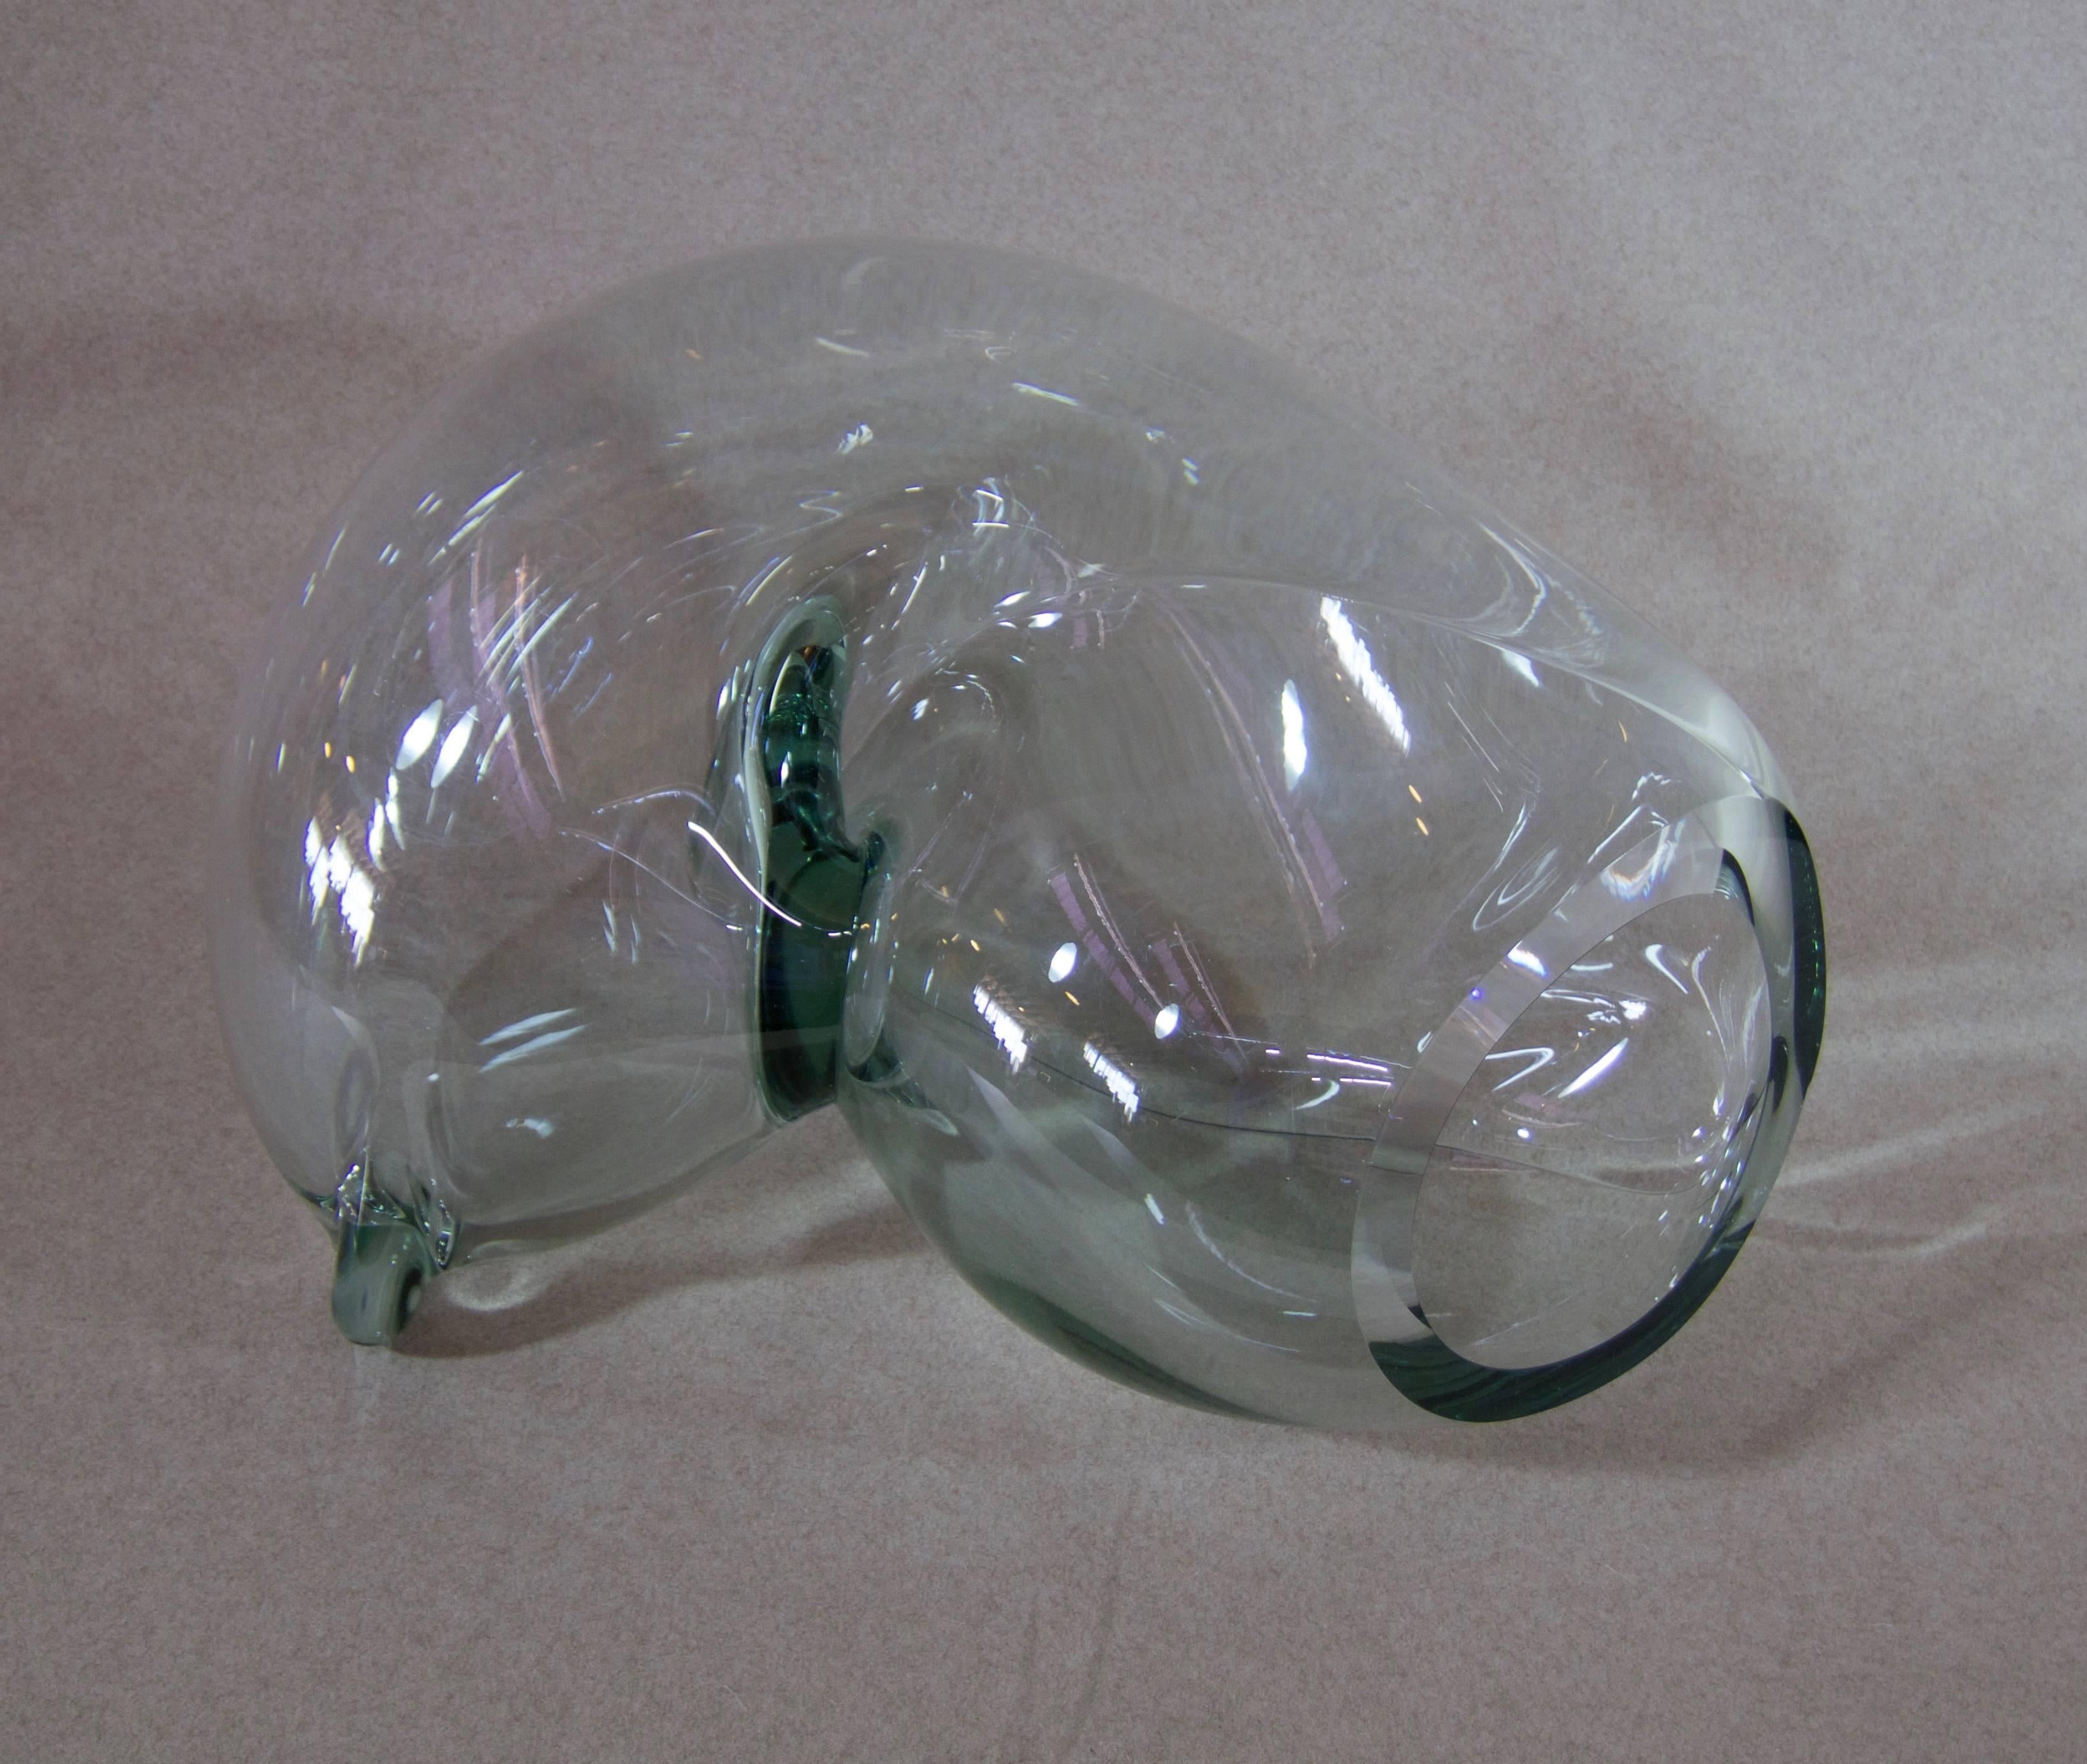 Biomorphic glass sculpture - Abstract Sculpture by John Bingham